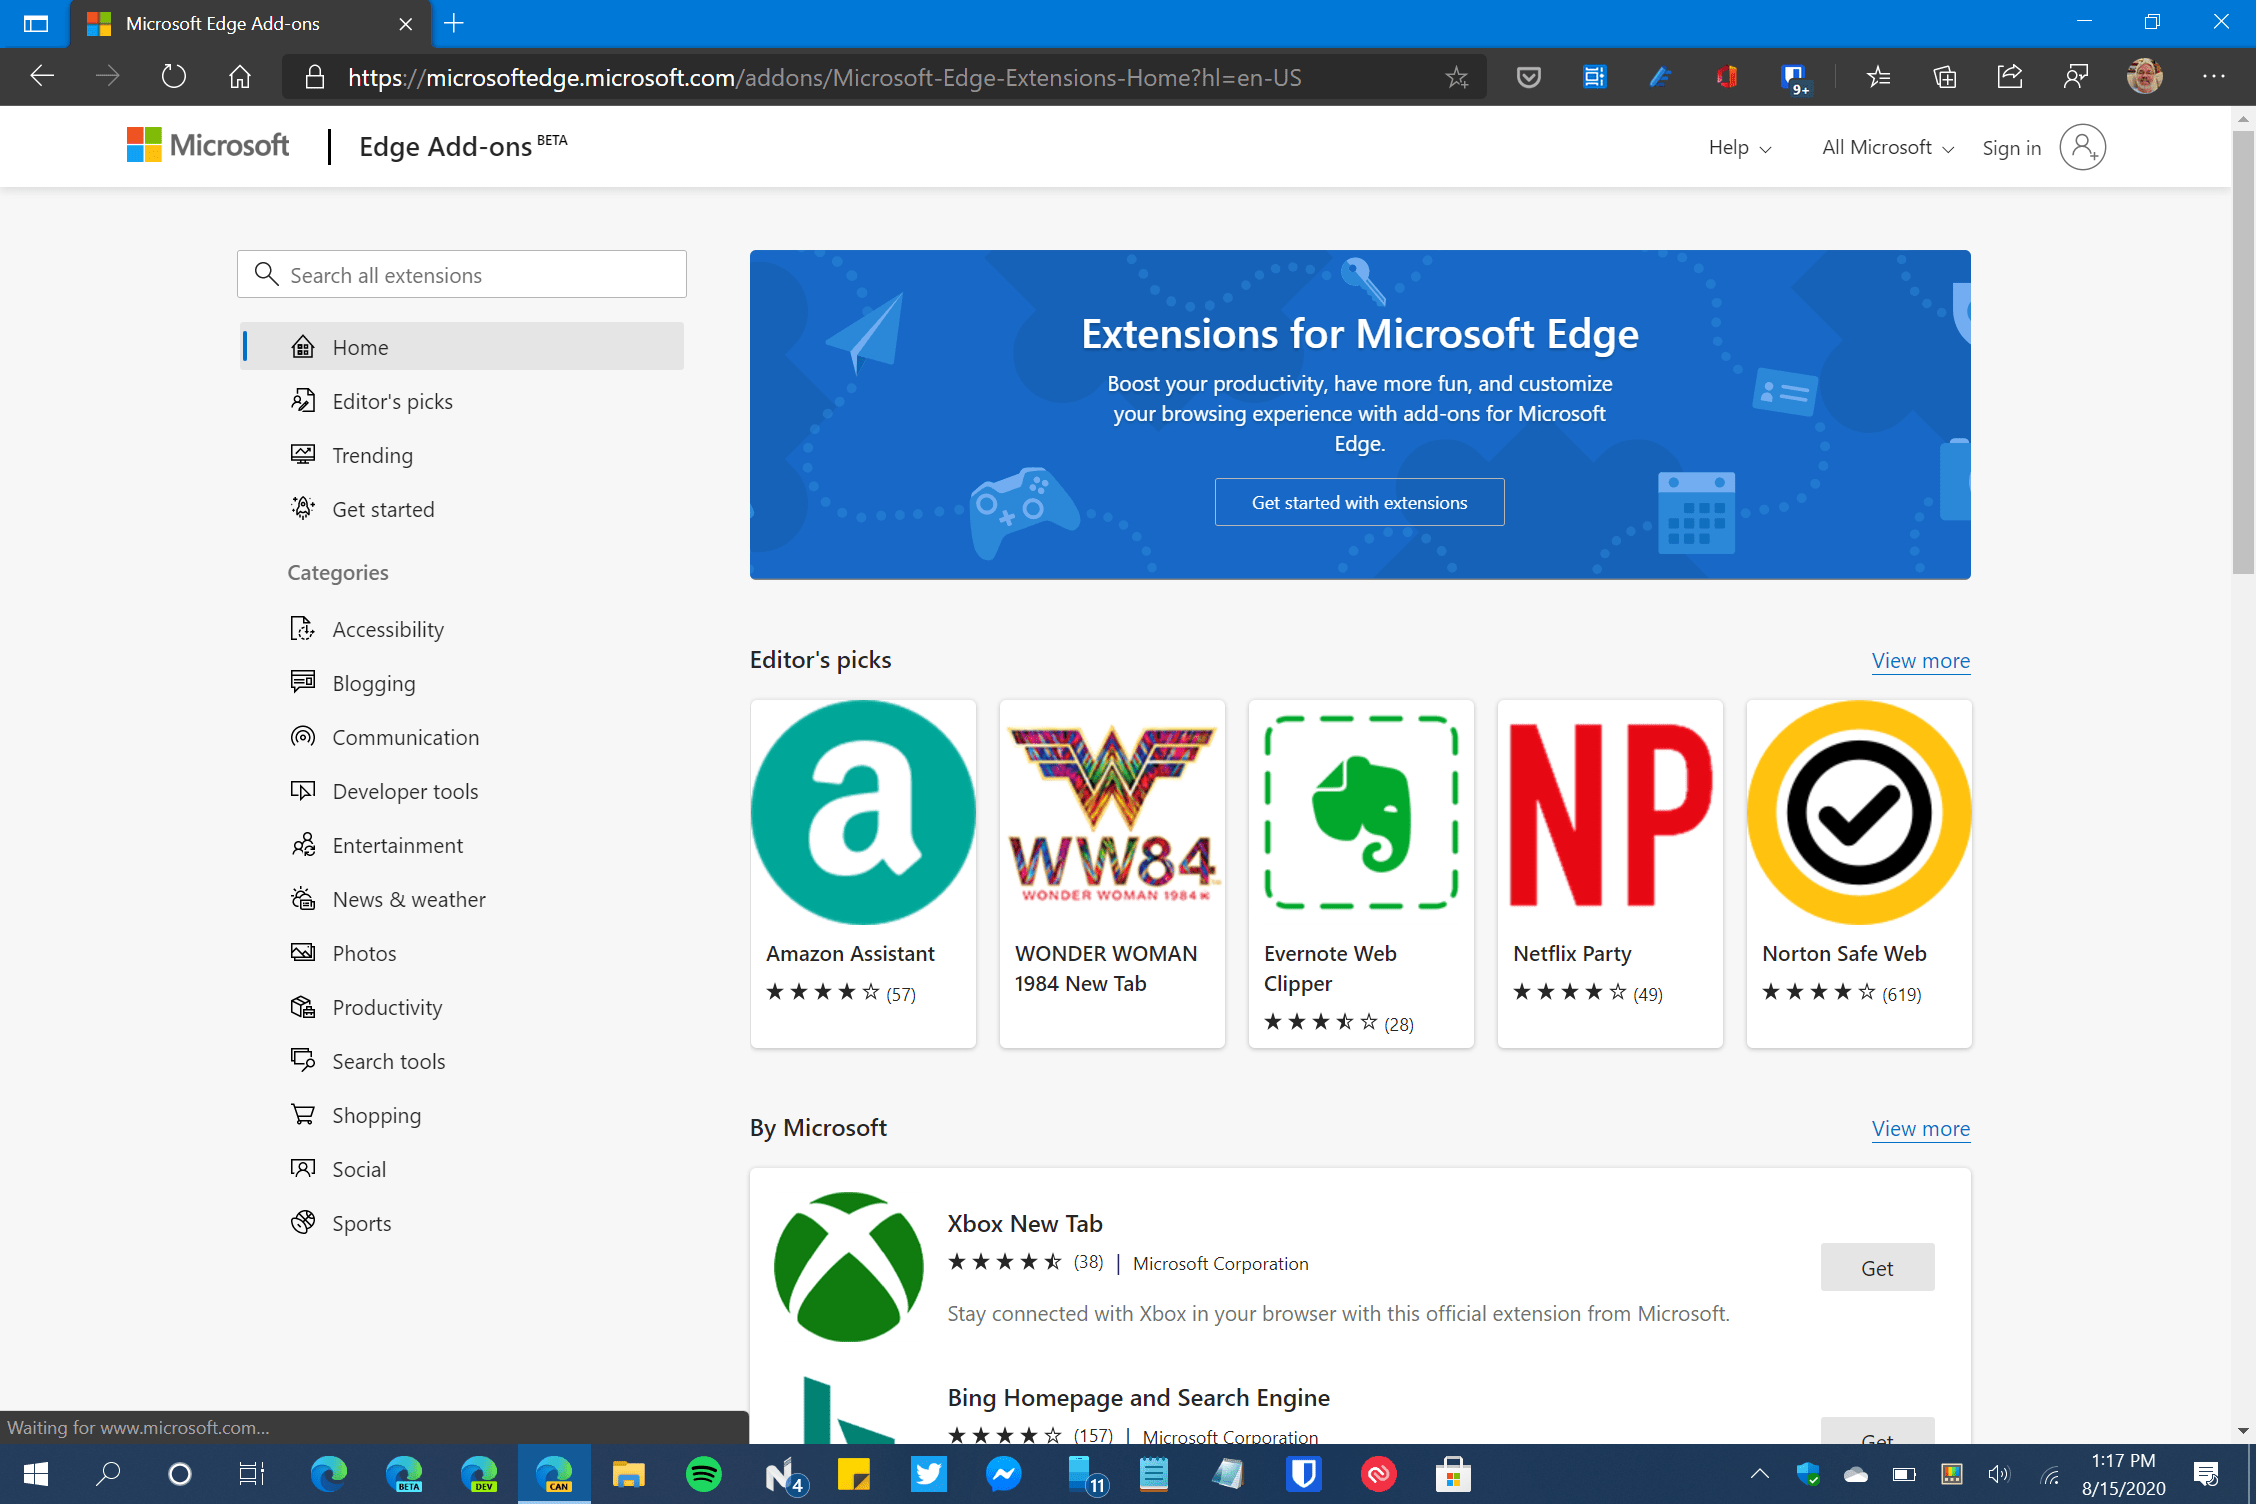 Microsoft Edge Add-ons